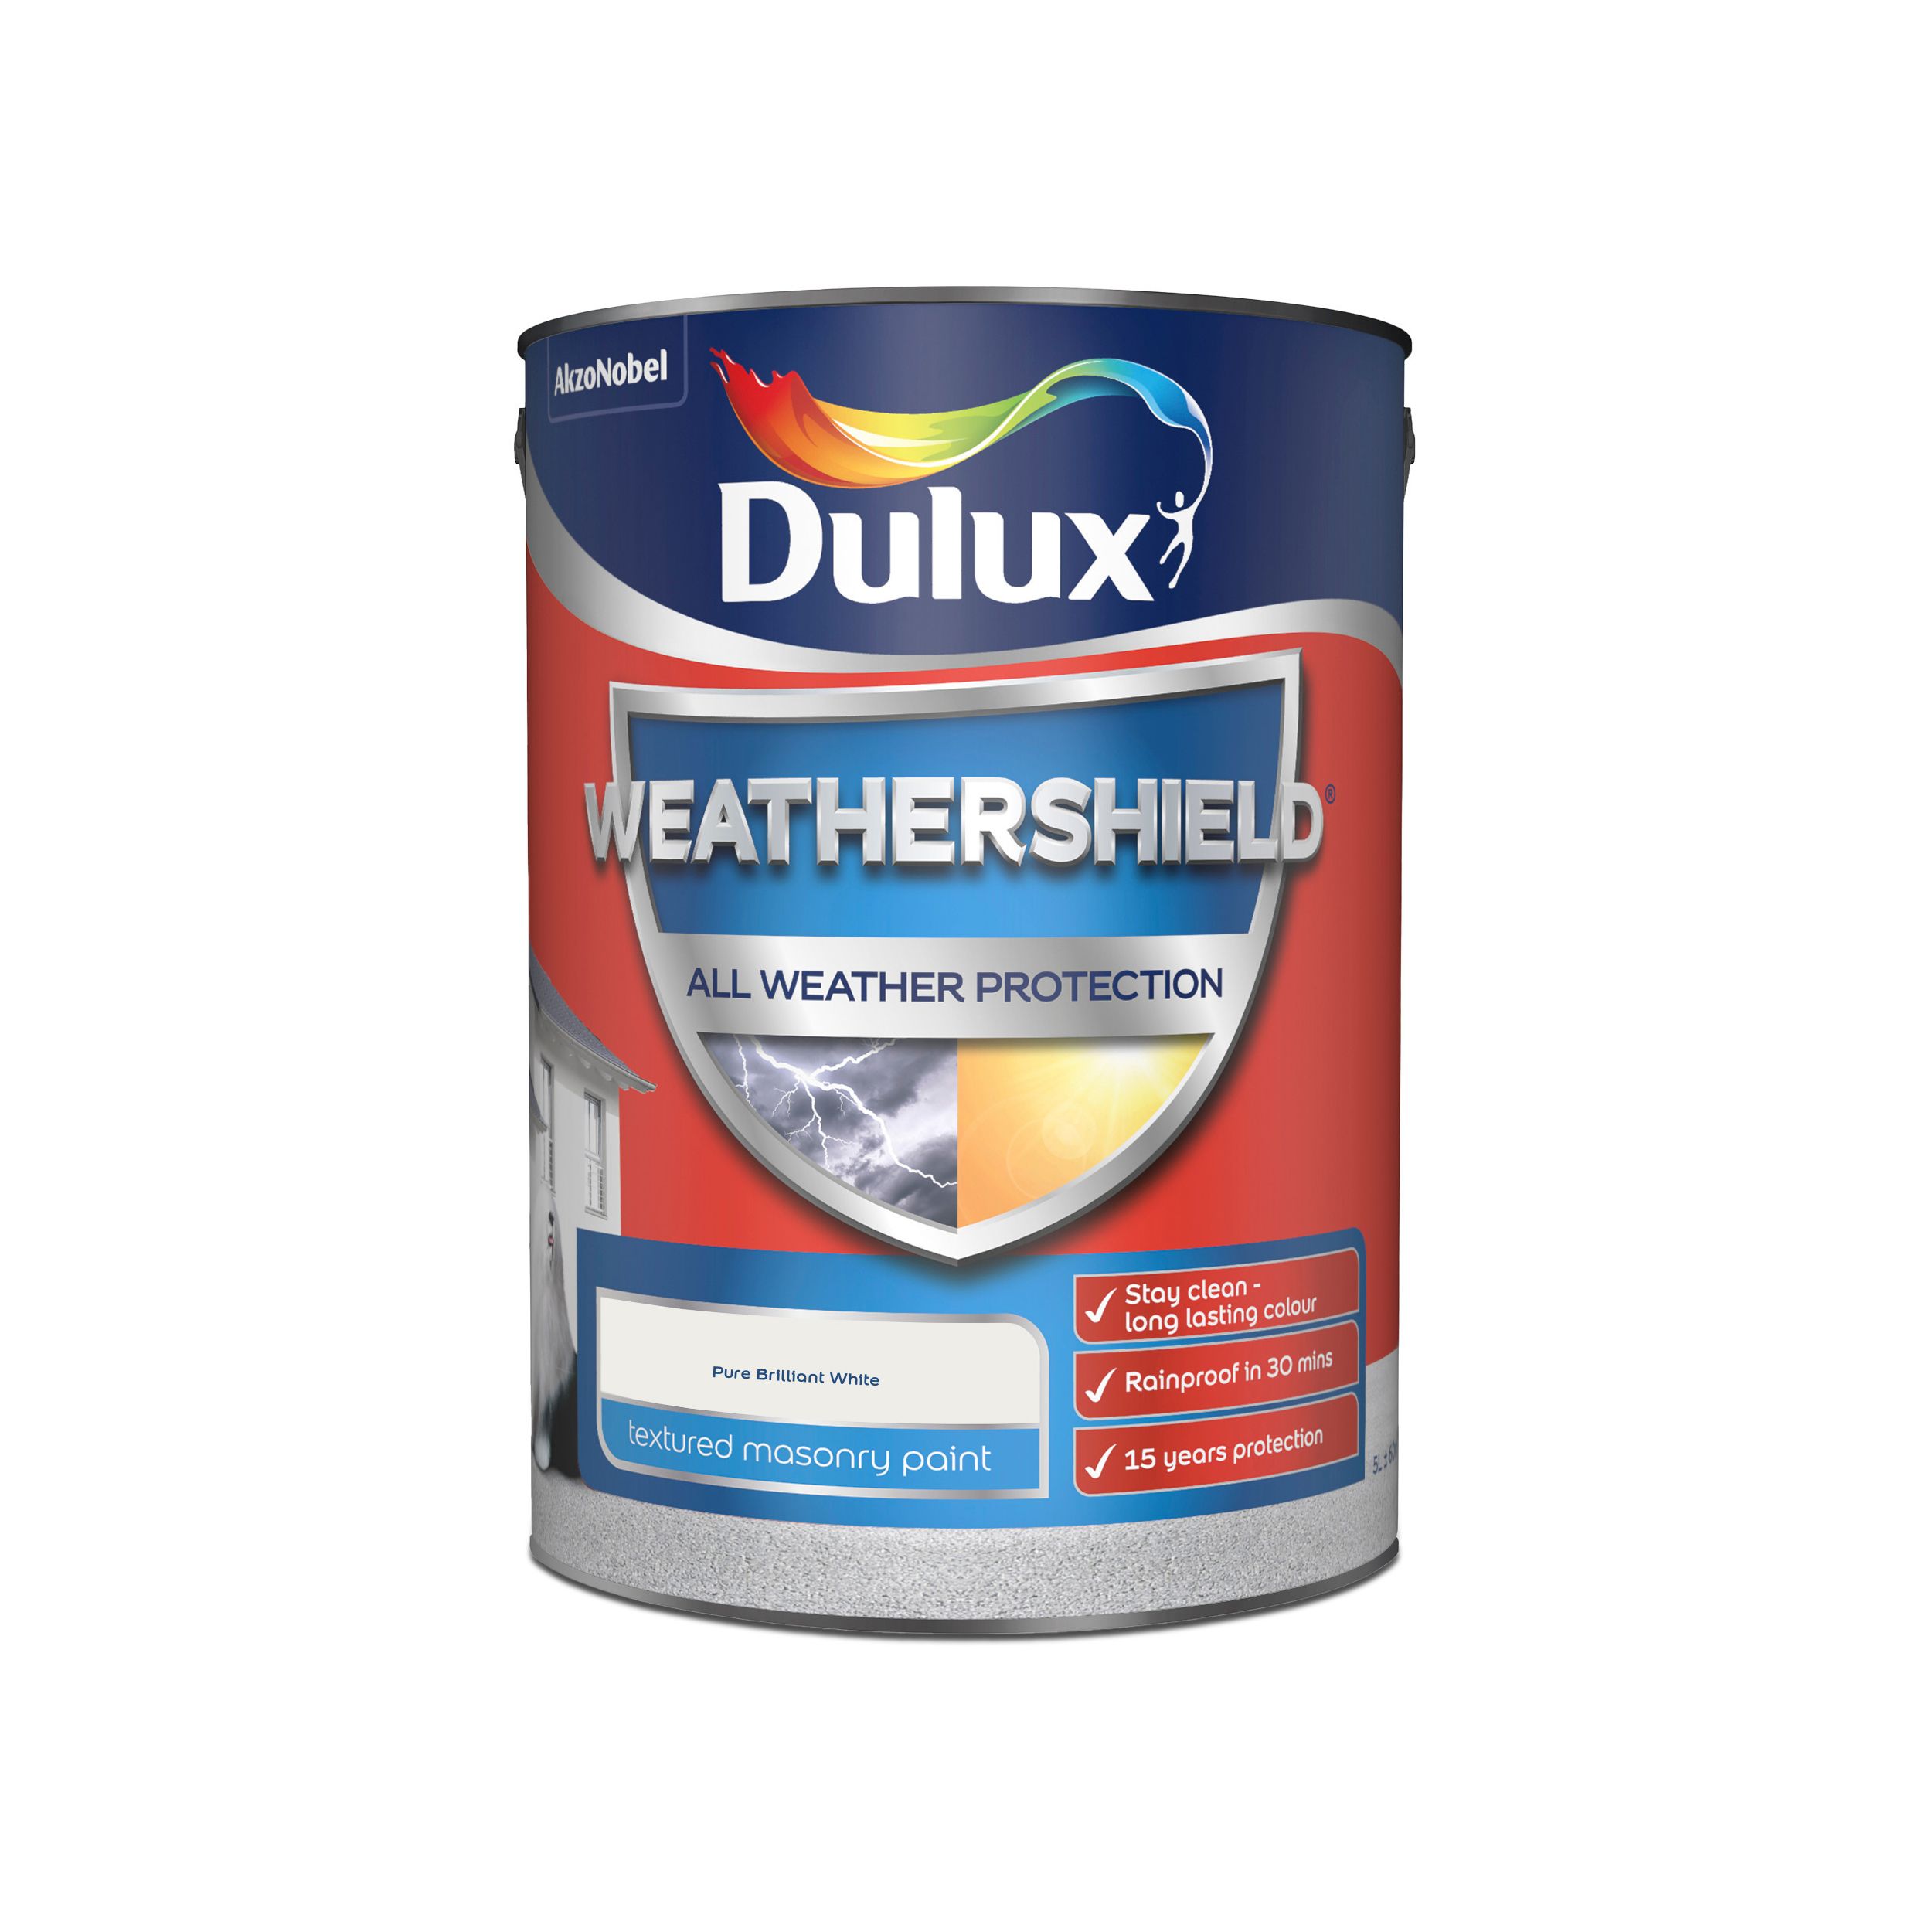 Dulux Weathershield Pure brilliant white Textured Matt Masonry paint, 5L